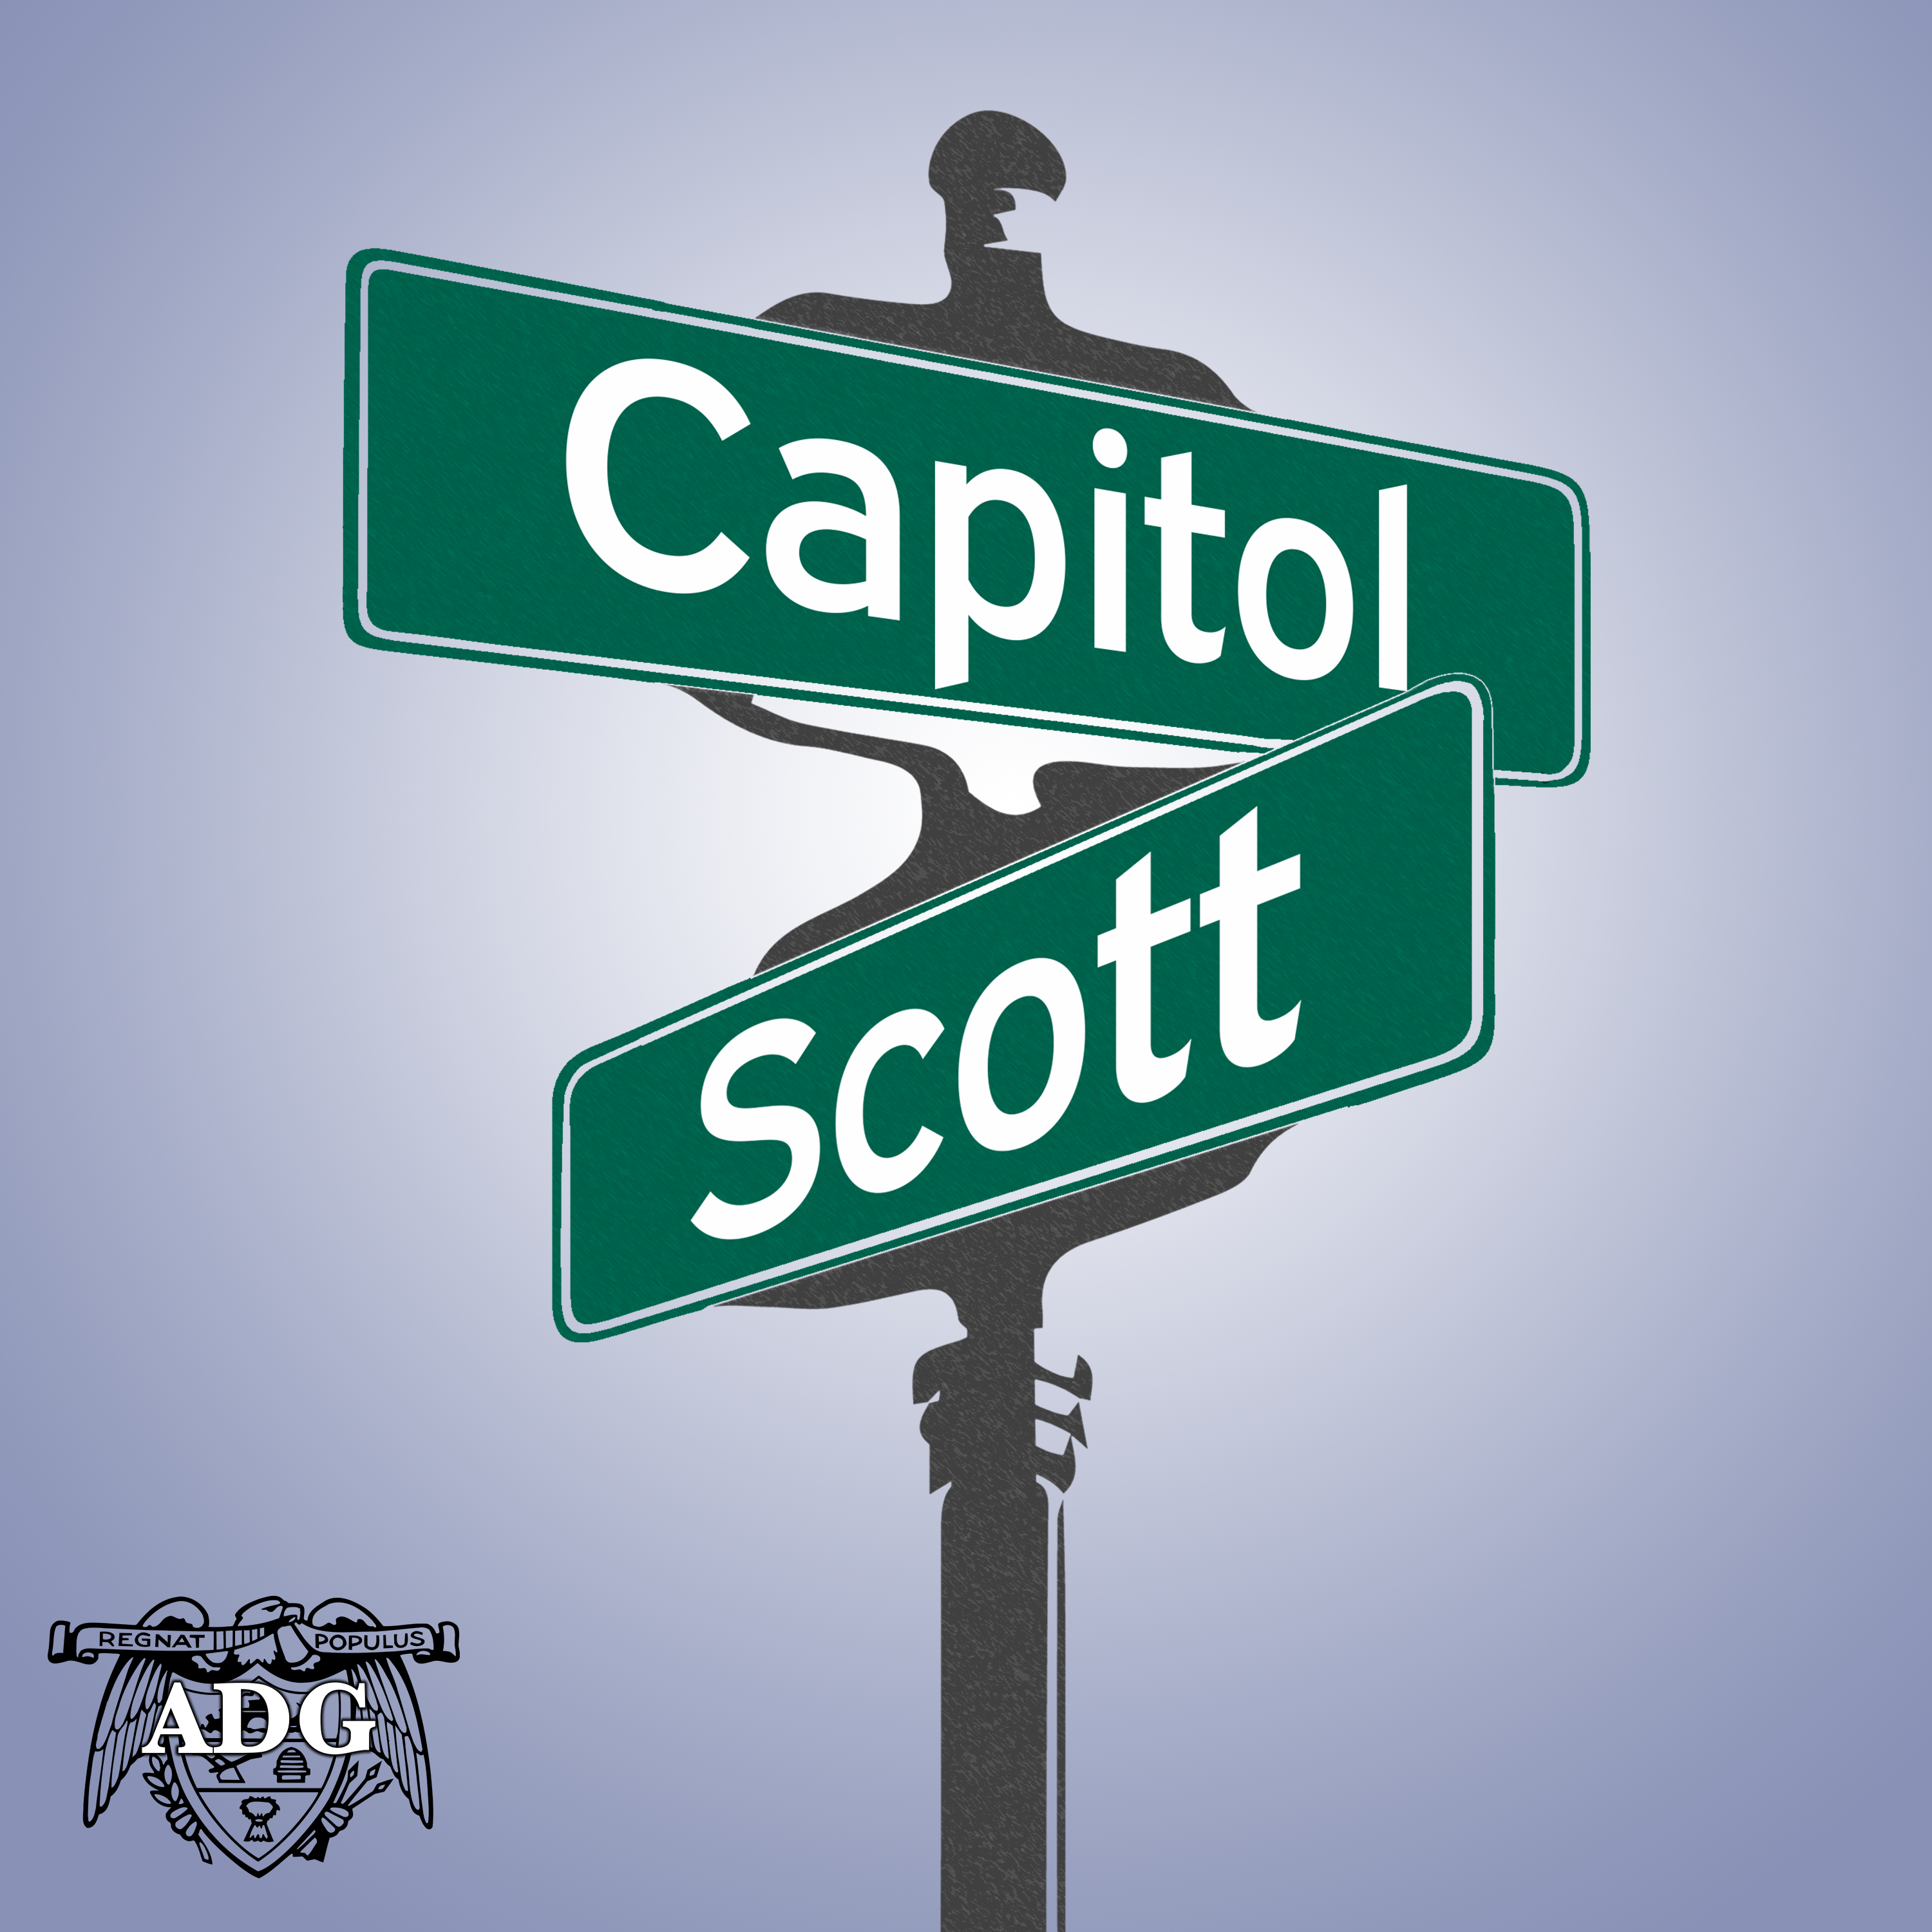 Capitol & Scott: Dr. Jennifer Ballard discusses CWD